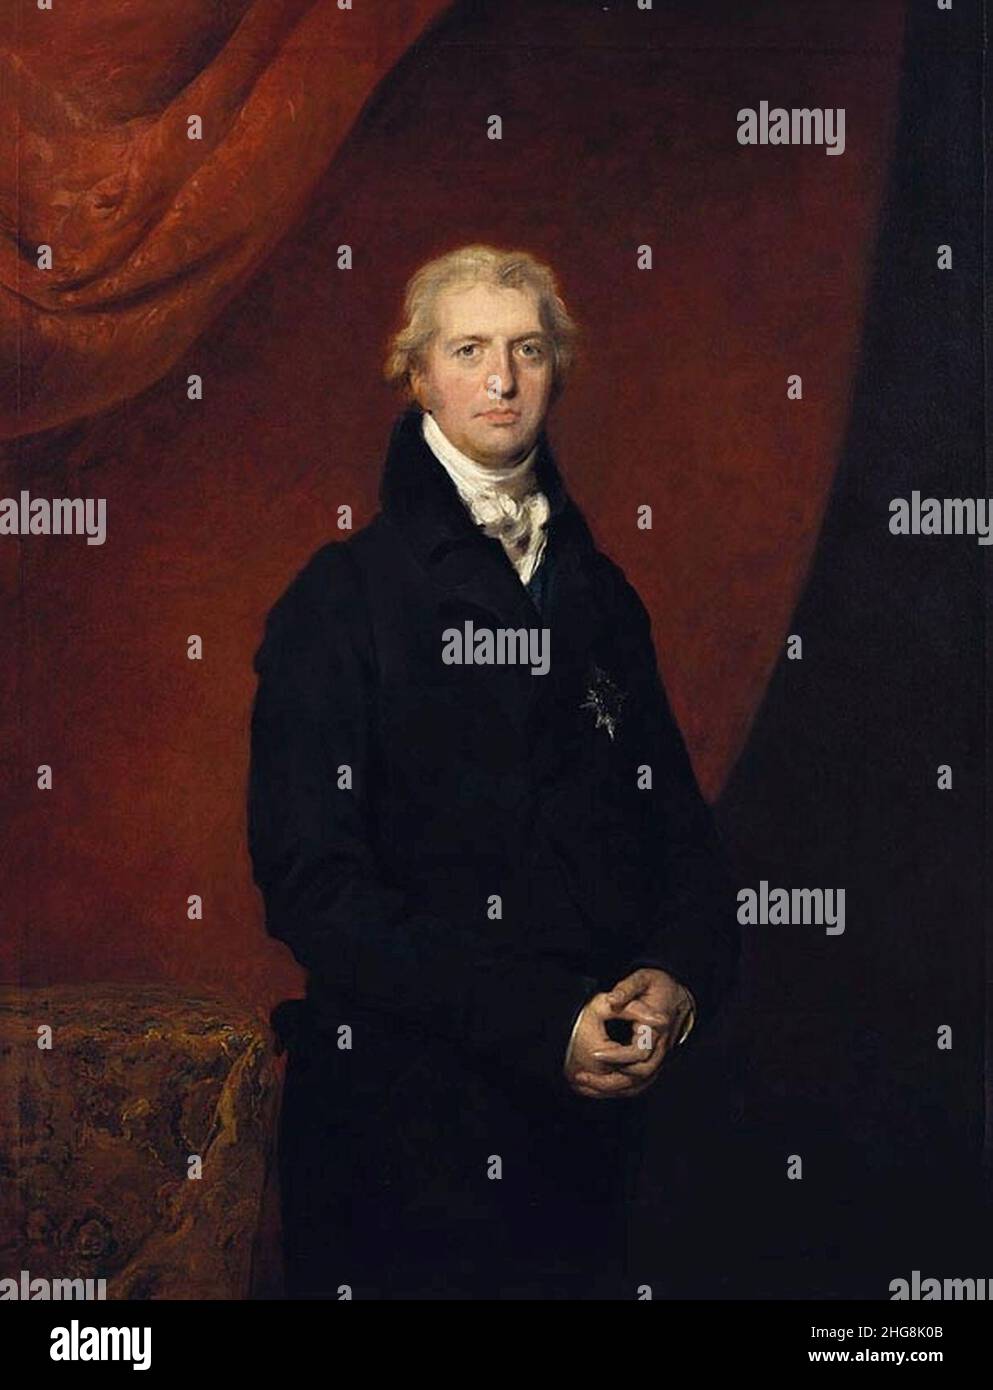 Sir Thomas Lawrence (1769-1830) - Robert Banks Jenkinson (1770-1828), 2nd Earl of Liverpool Foto de stock